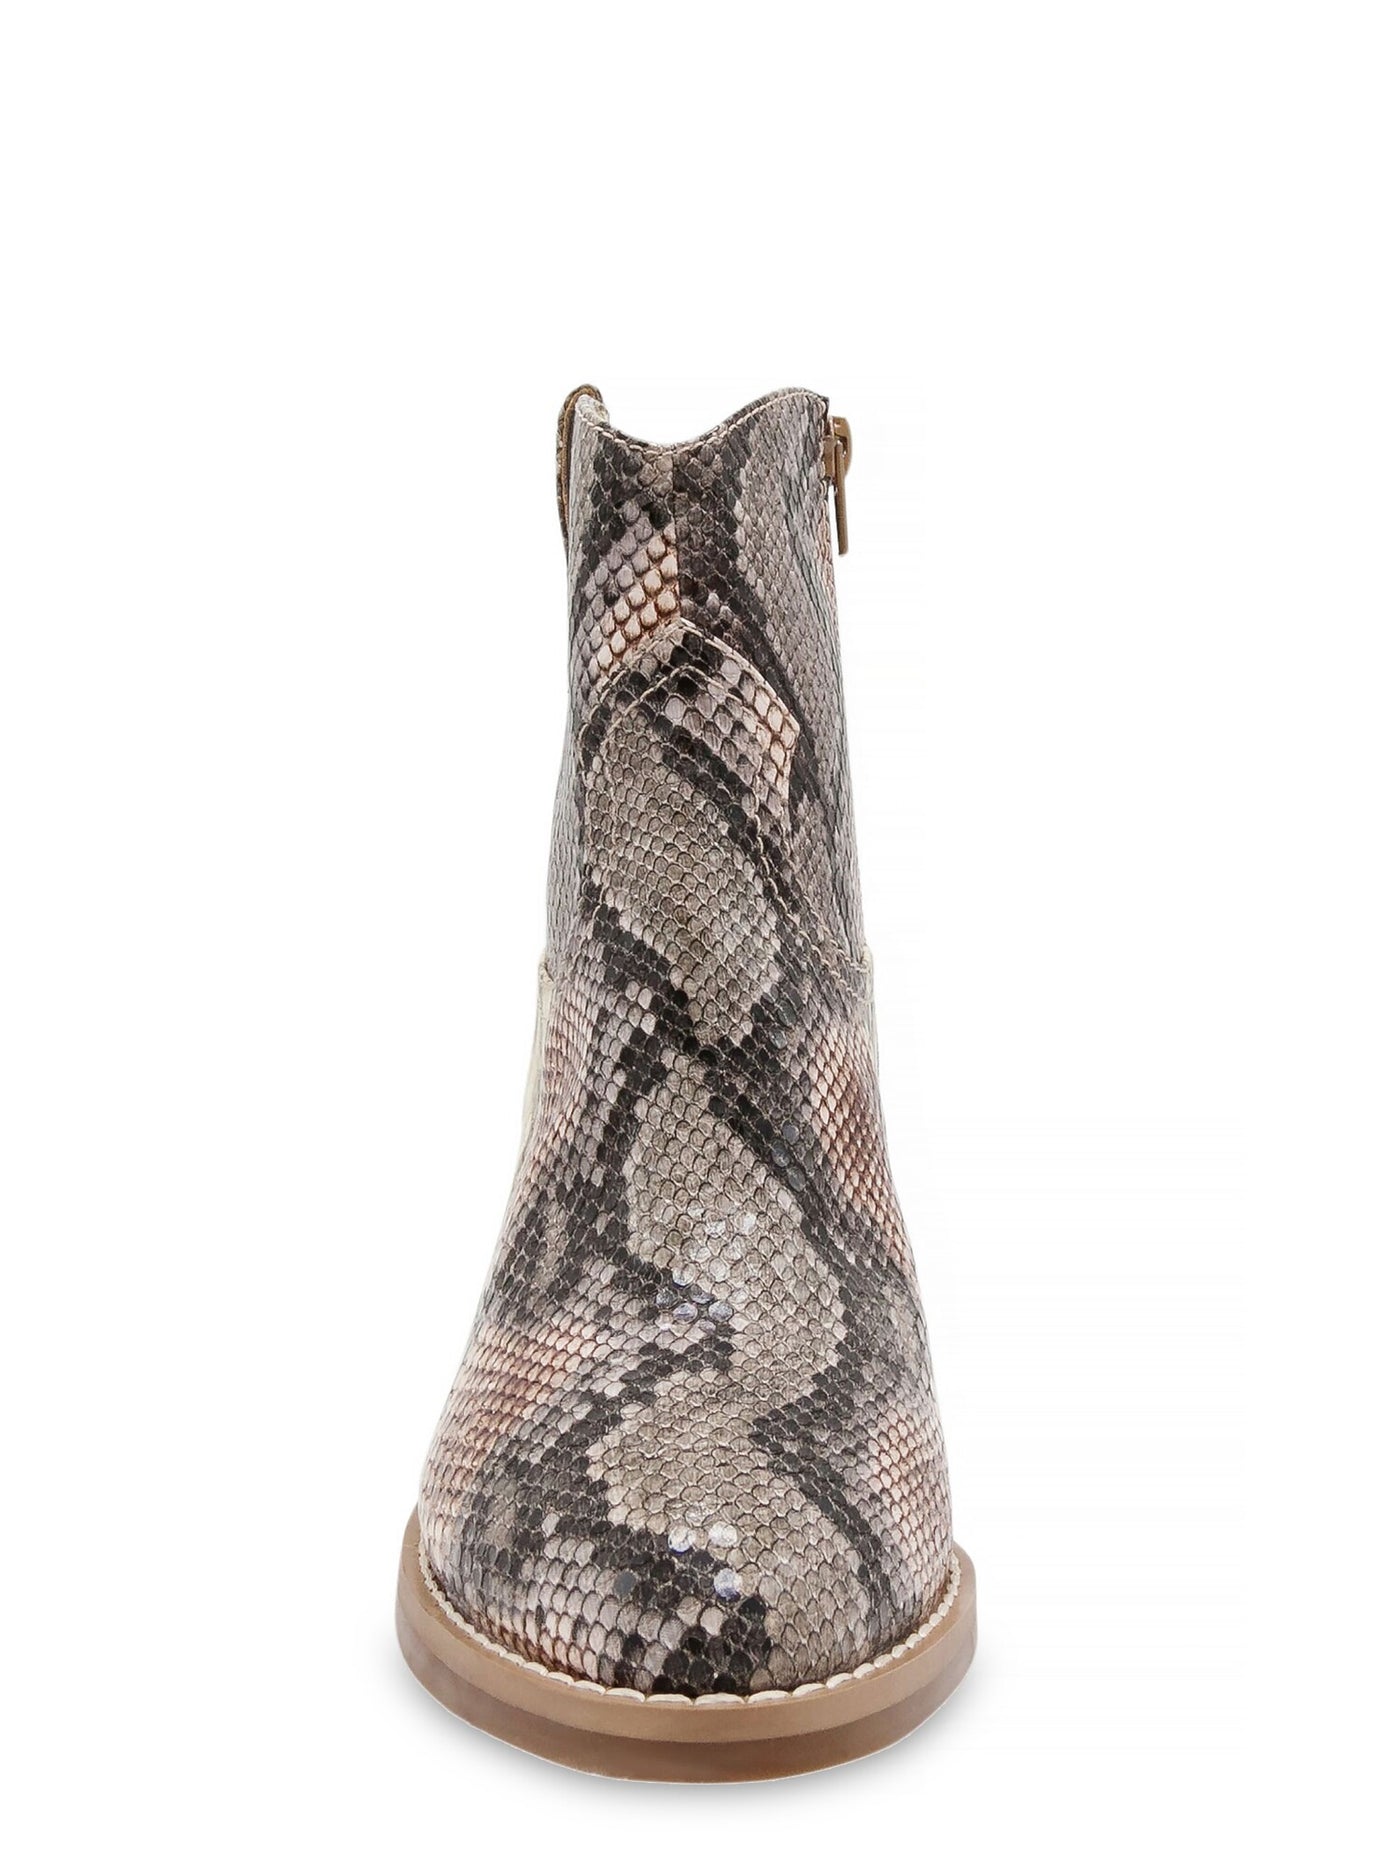 SUGAR Womens Blush Brown Snake Cushioned Comfort Tarah Almond Toe Block Heel Zip-Up Booties 6 M